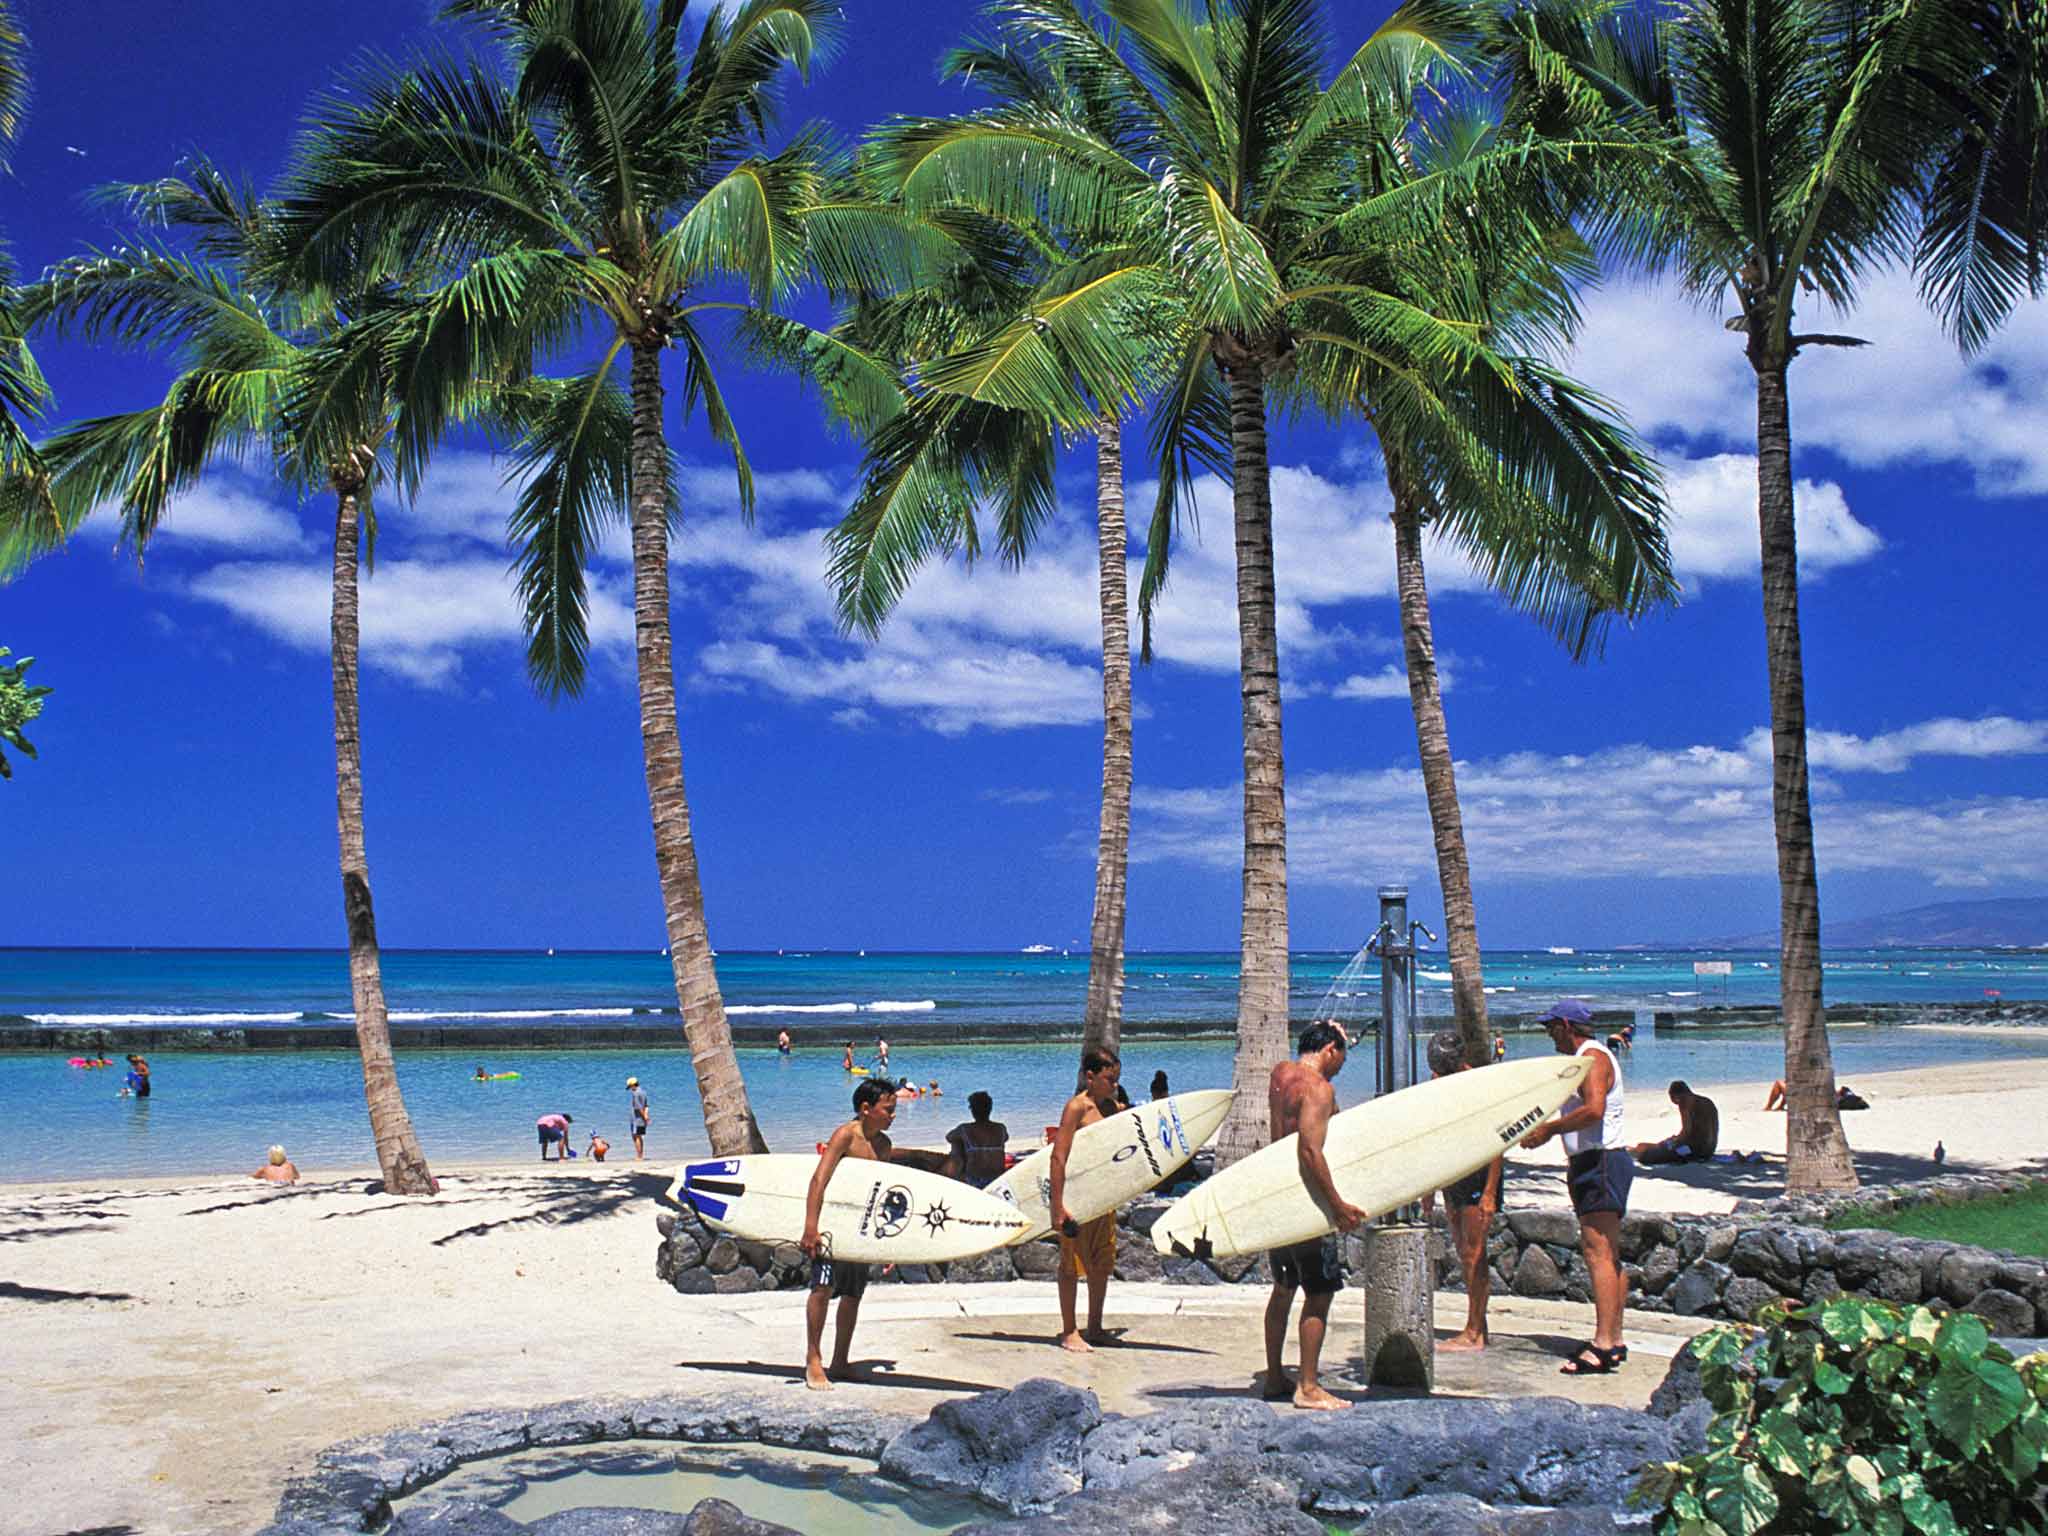 Surf's up: boarders in Waikiki